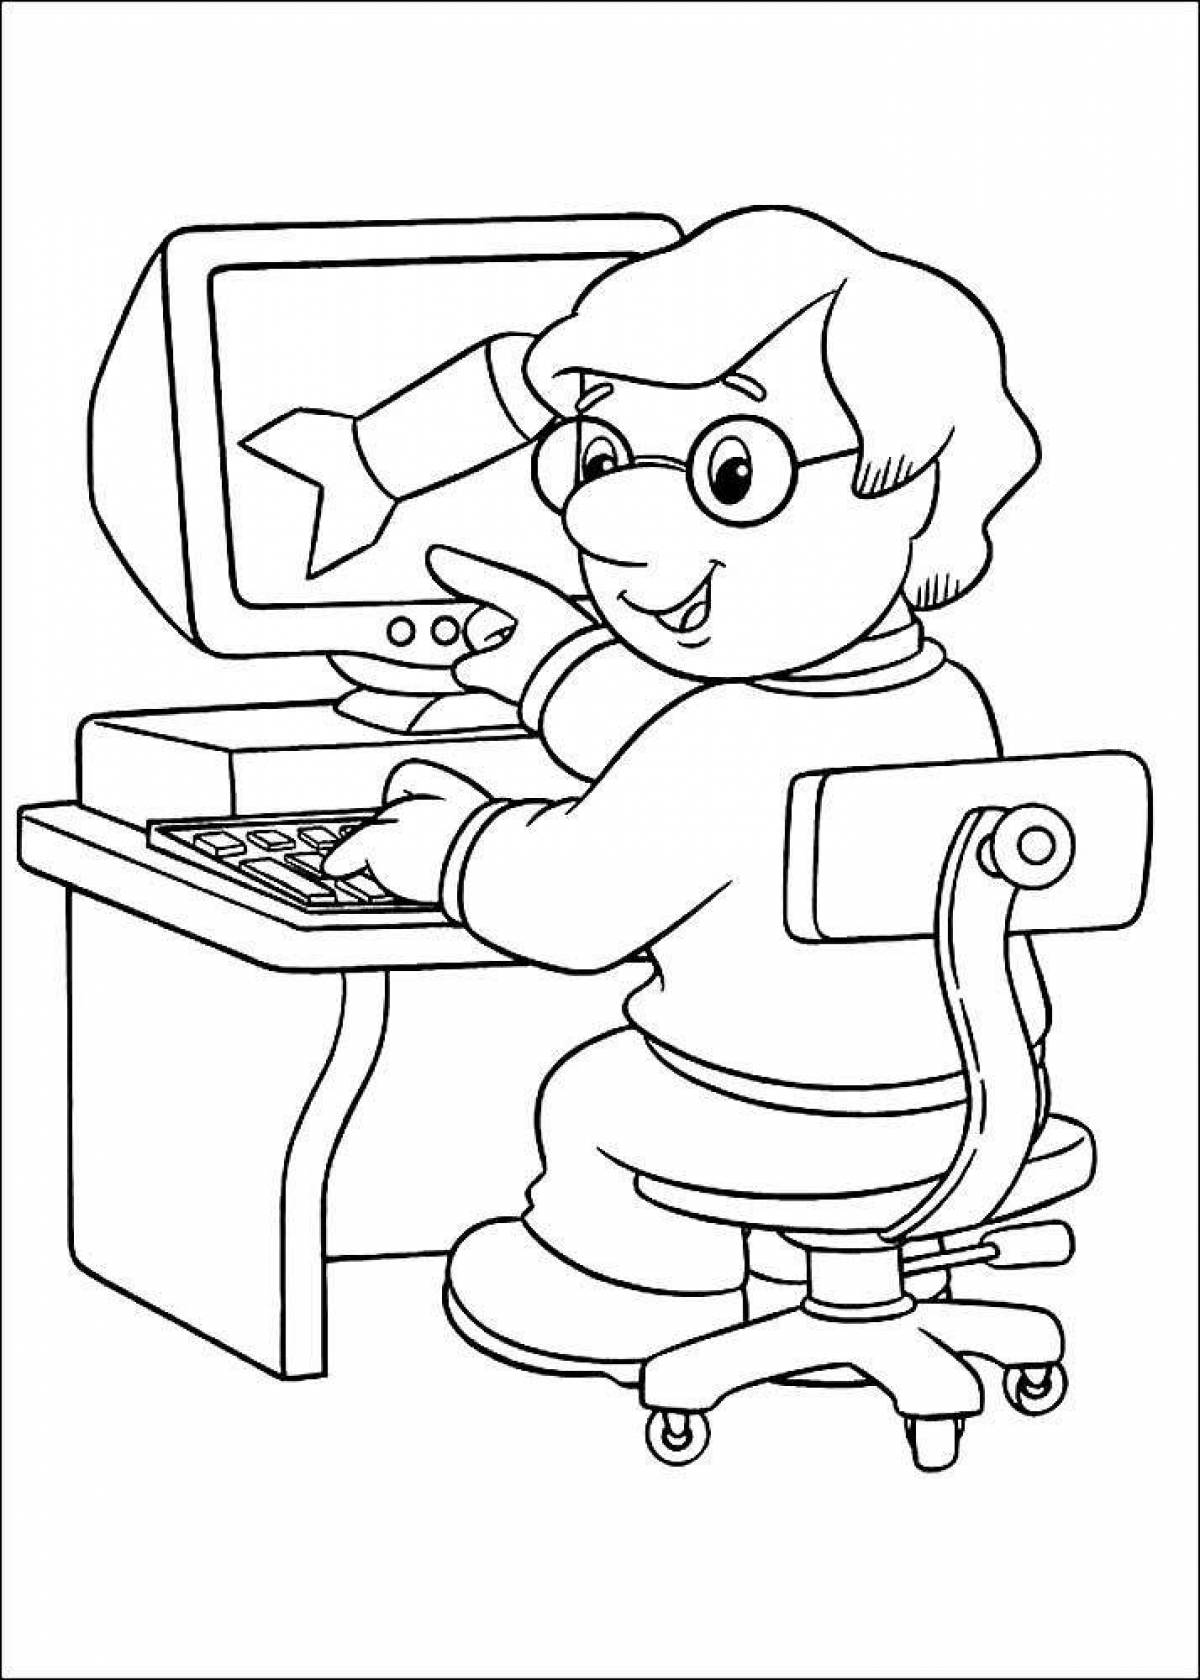 Innovative safer internet coloring page for kids